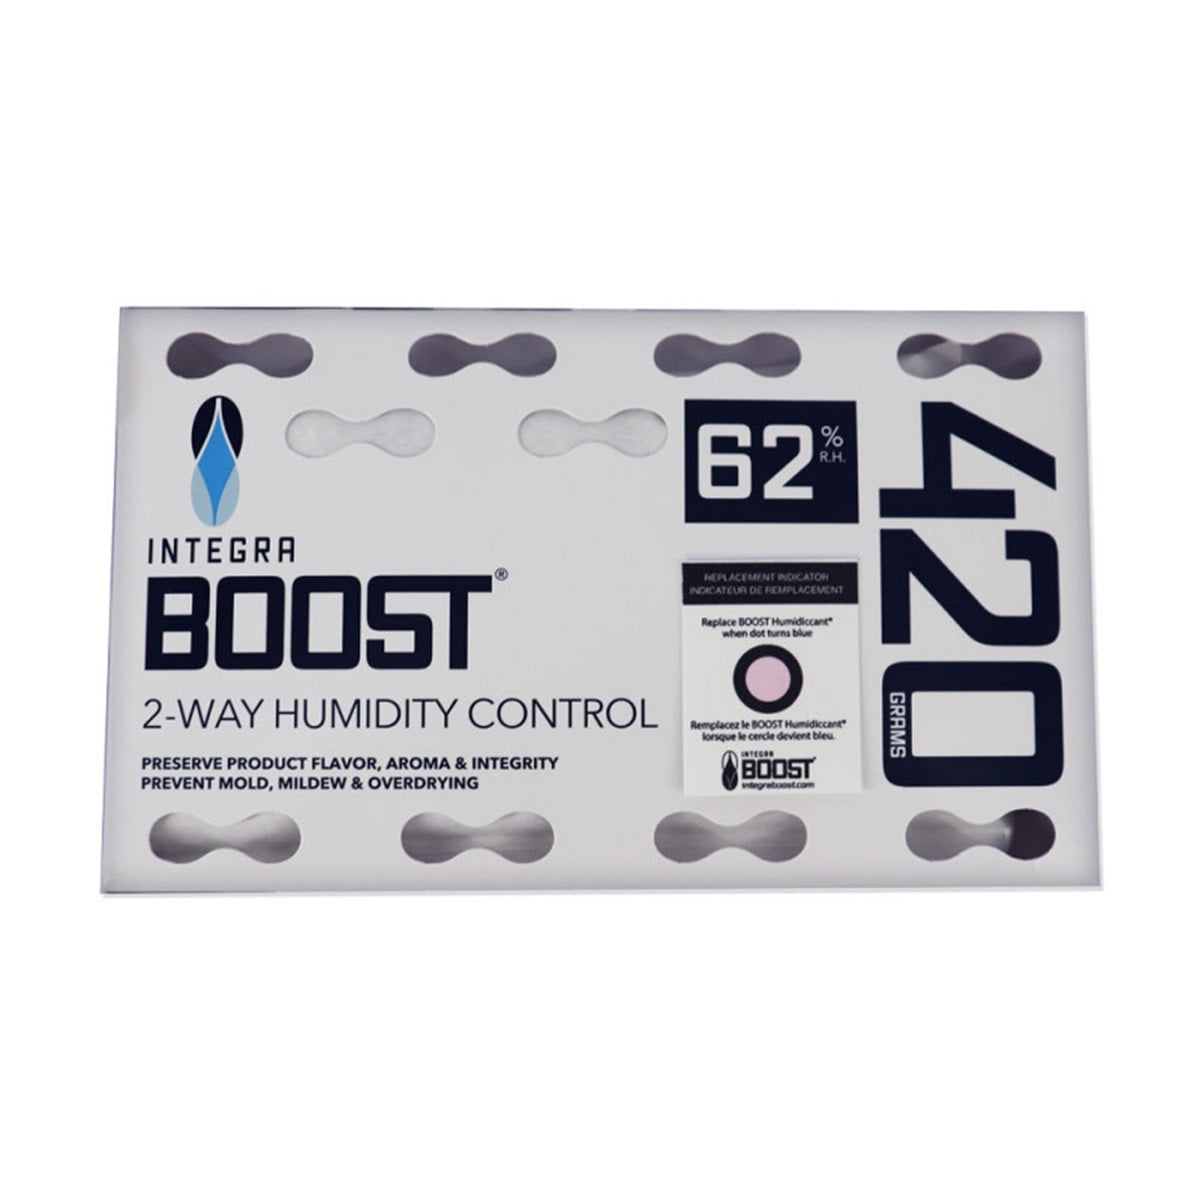 Sachet de controle de l'humidité Integra Boost 420 grammes - 62%